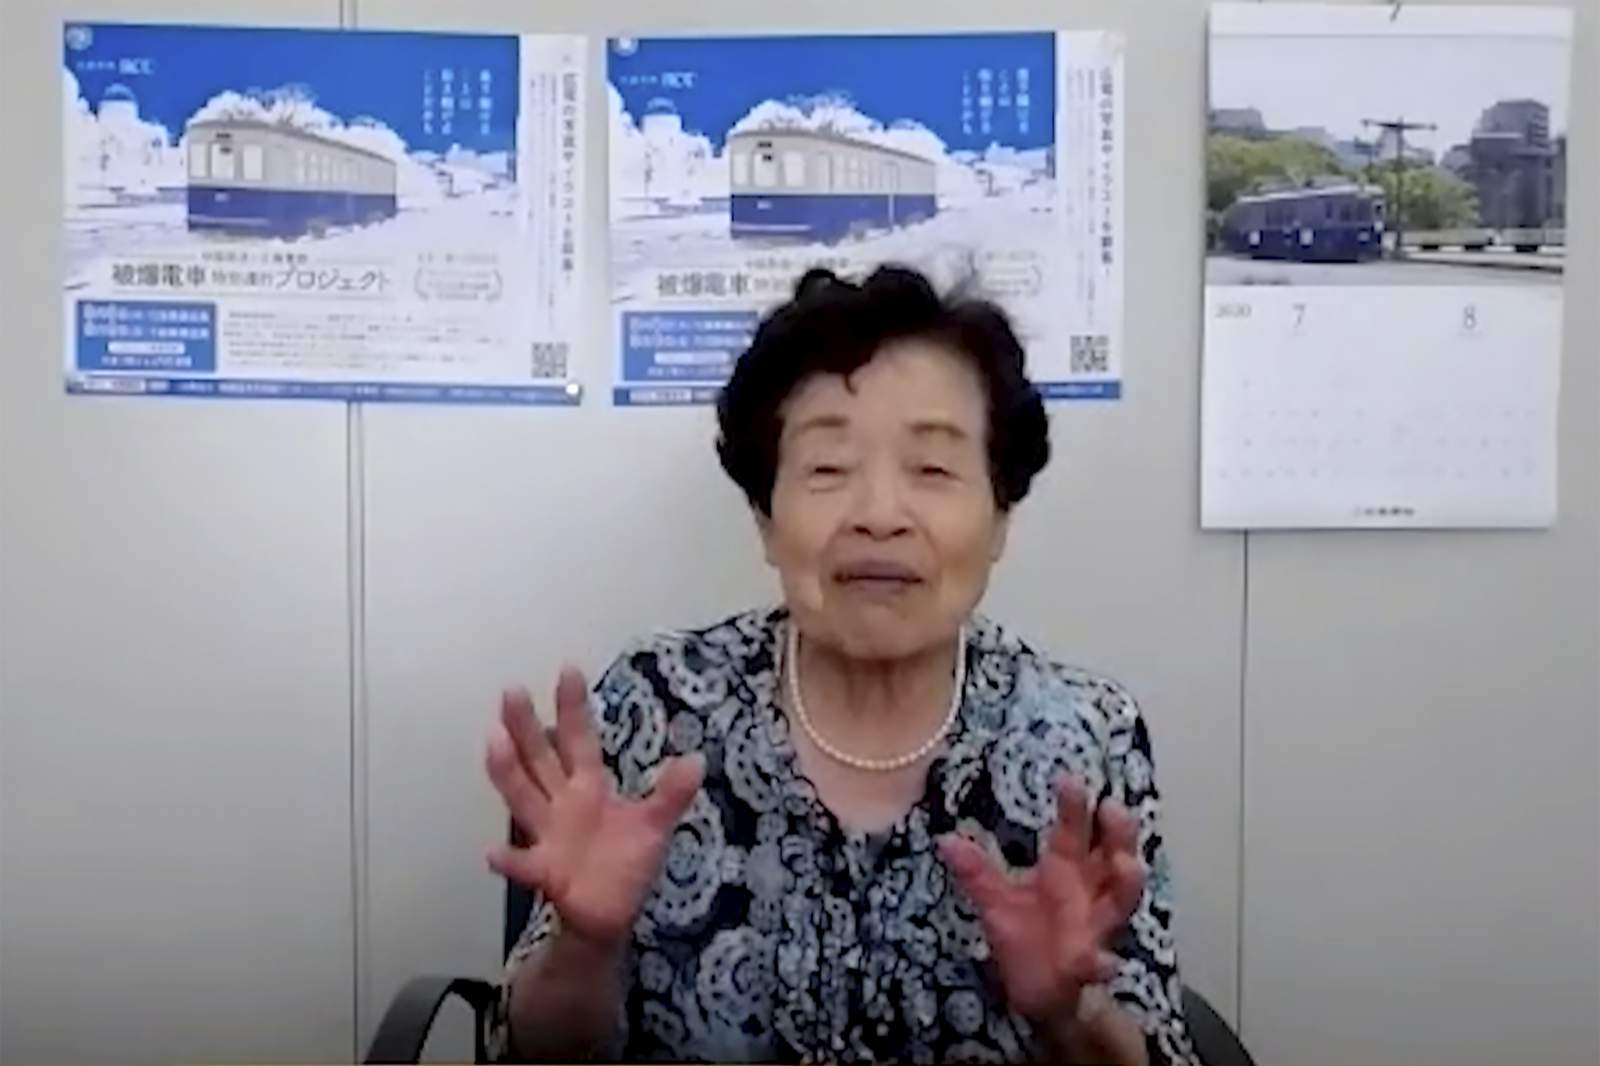 Hiroshima survivor recalls working on tram after A-bomb